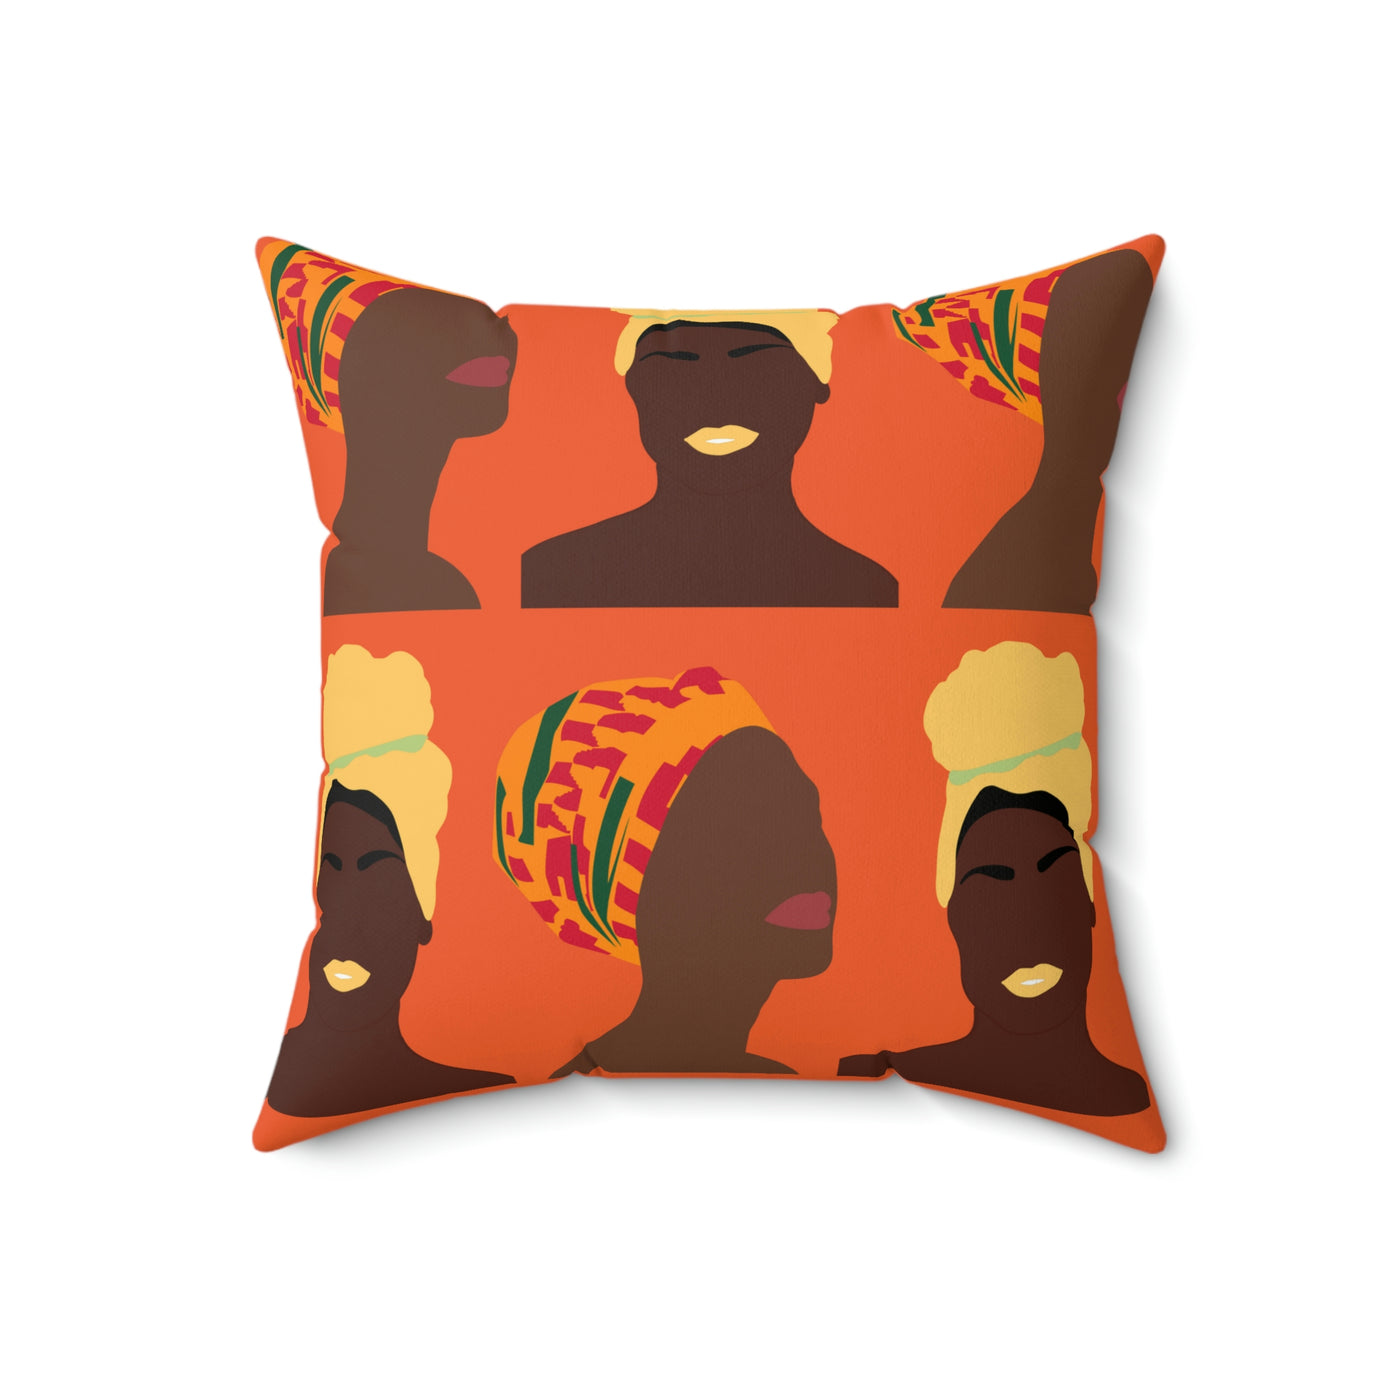 Women in Turban African Tribal Culture Pillow Case